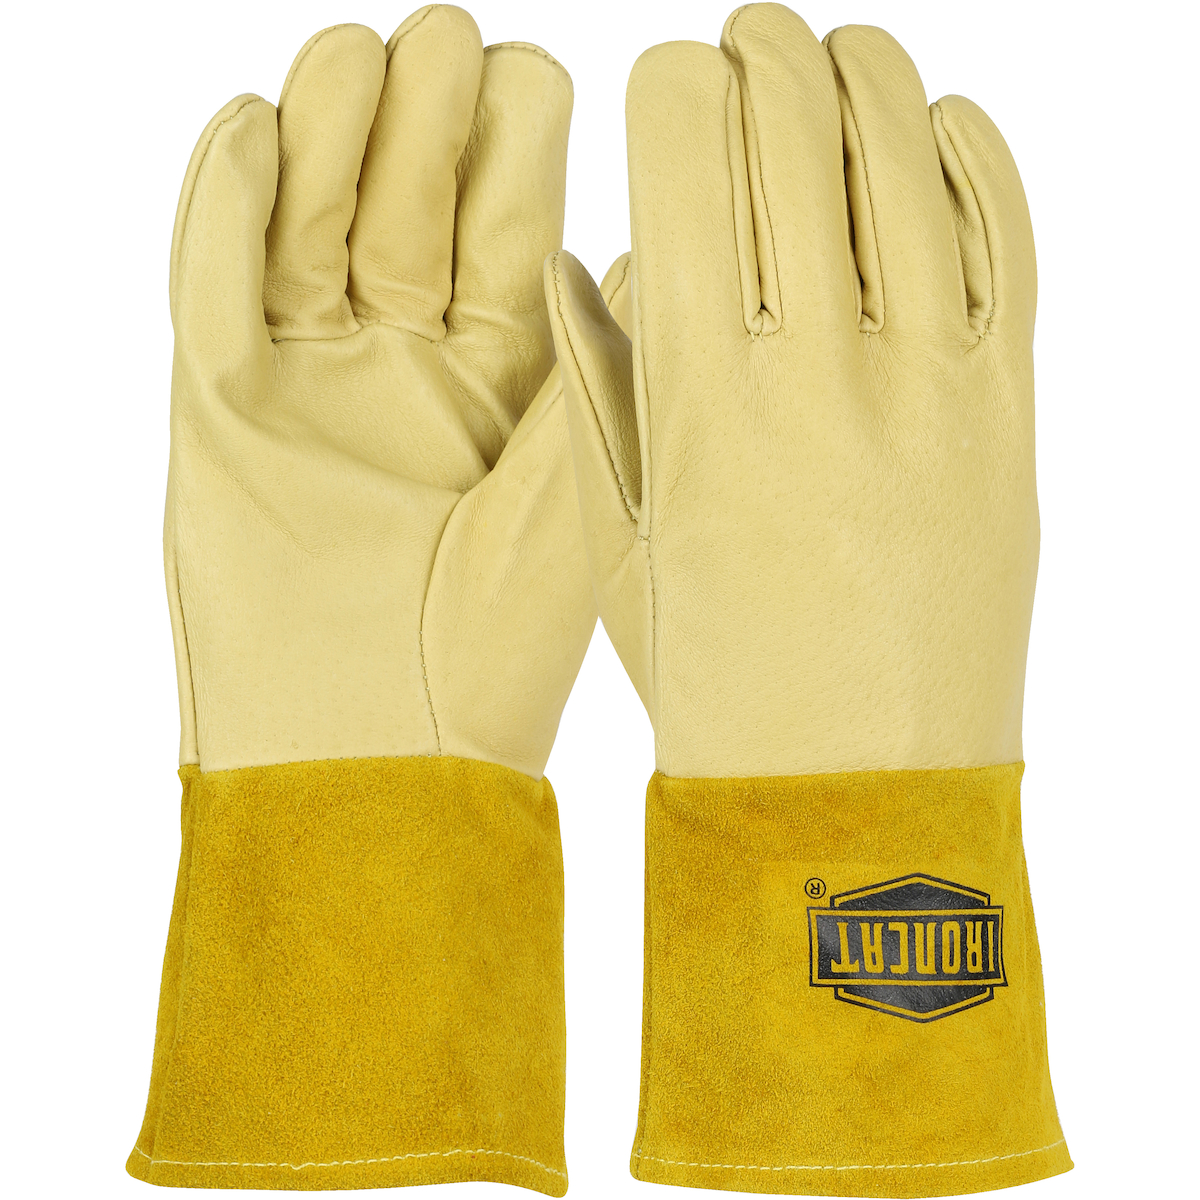 6021 PIP® Ironcat Premium Top Grain Pigskin Leather Mig Welder's Glove with Kevlar Stitching and 4-inch Leather Gauntlet Cuff